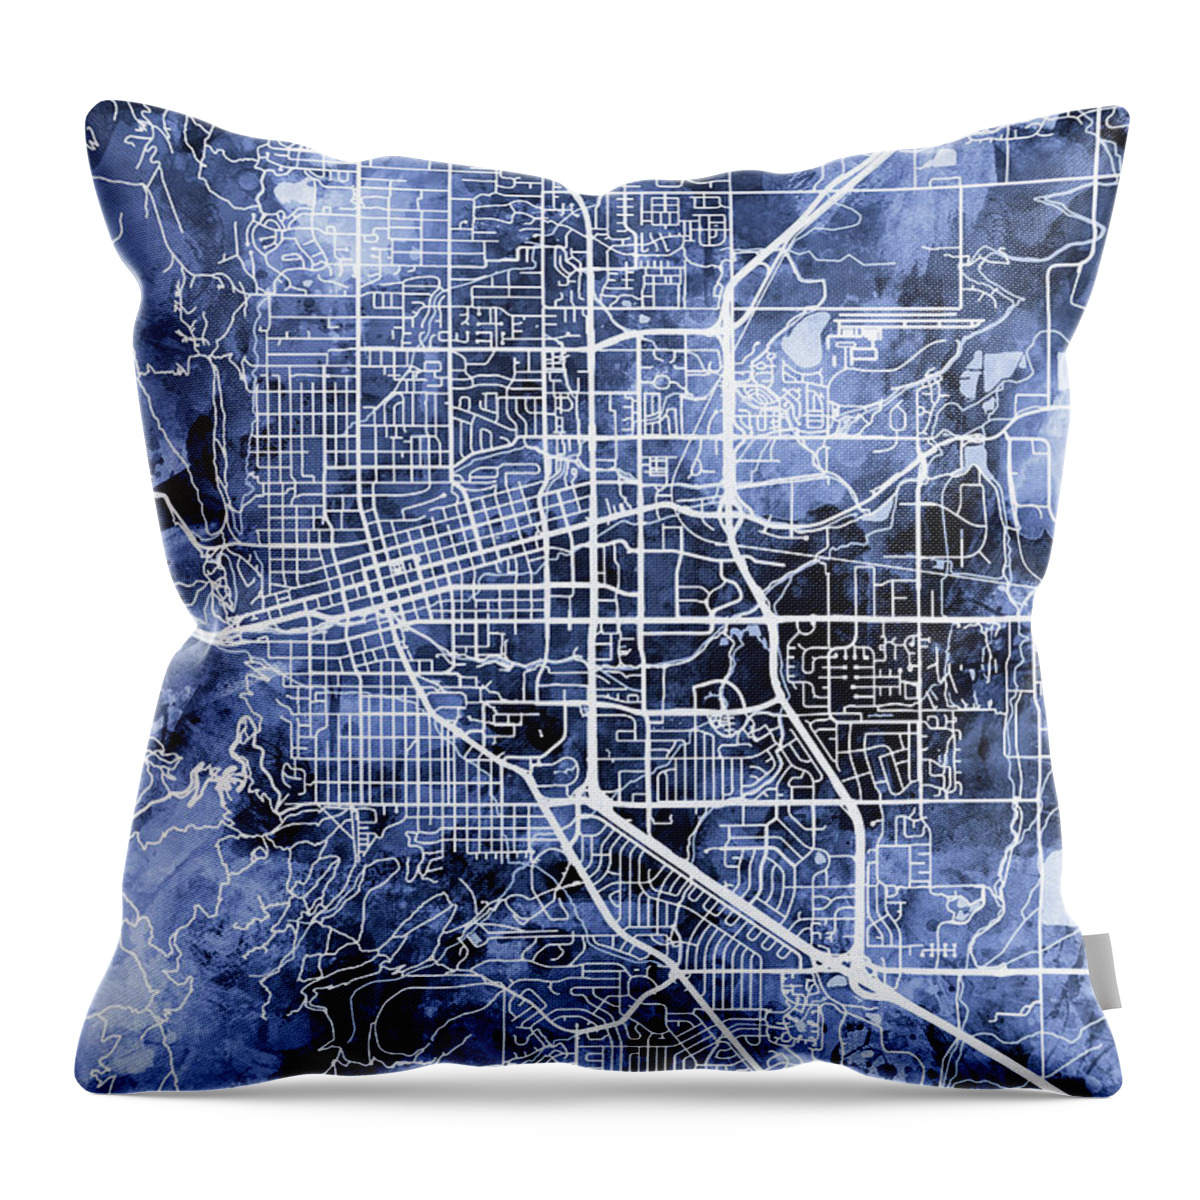 Boulder Throw Pillow featuring the digital art Boulder Colorado City Map by Michael Tompsett